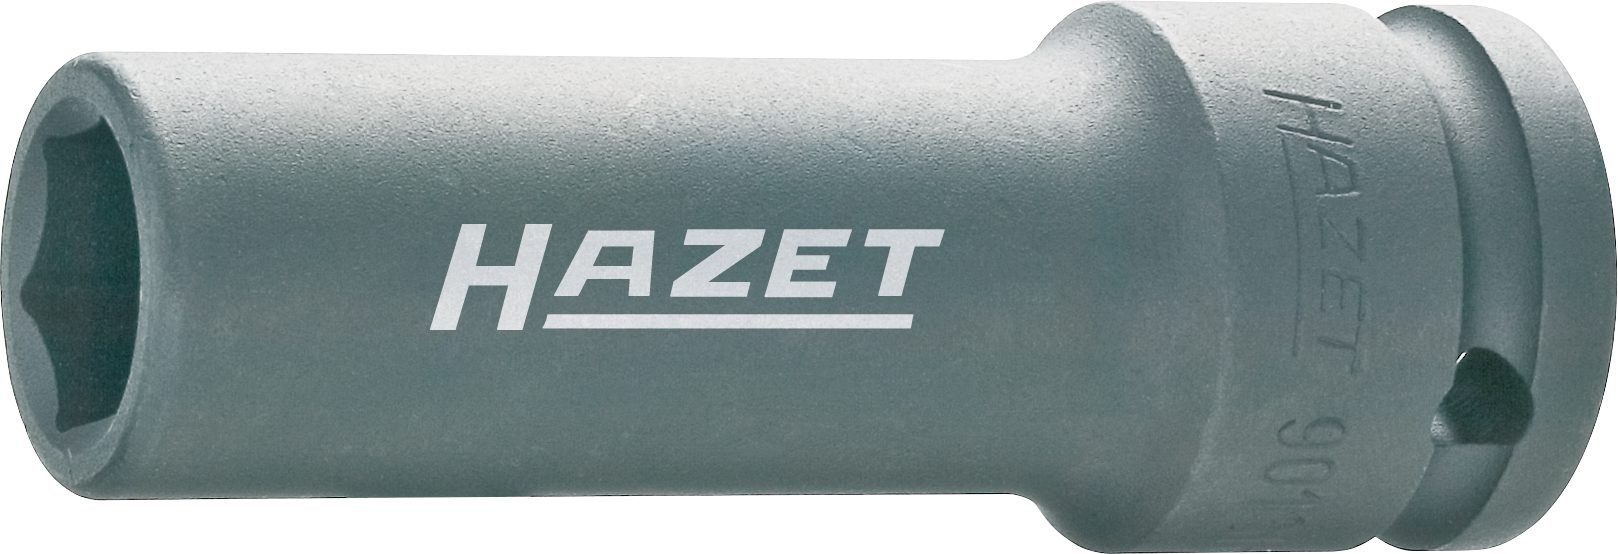 HAZET Steckschlüssel Hazet Kraft-Steckschlüssel-Einsatz (6kt), 901SLG-21